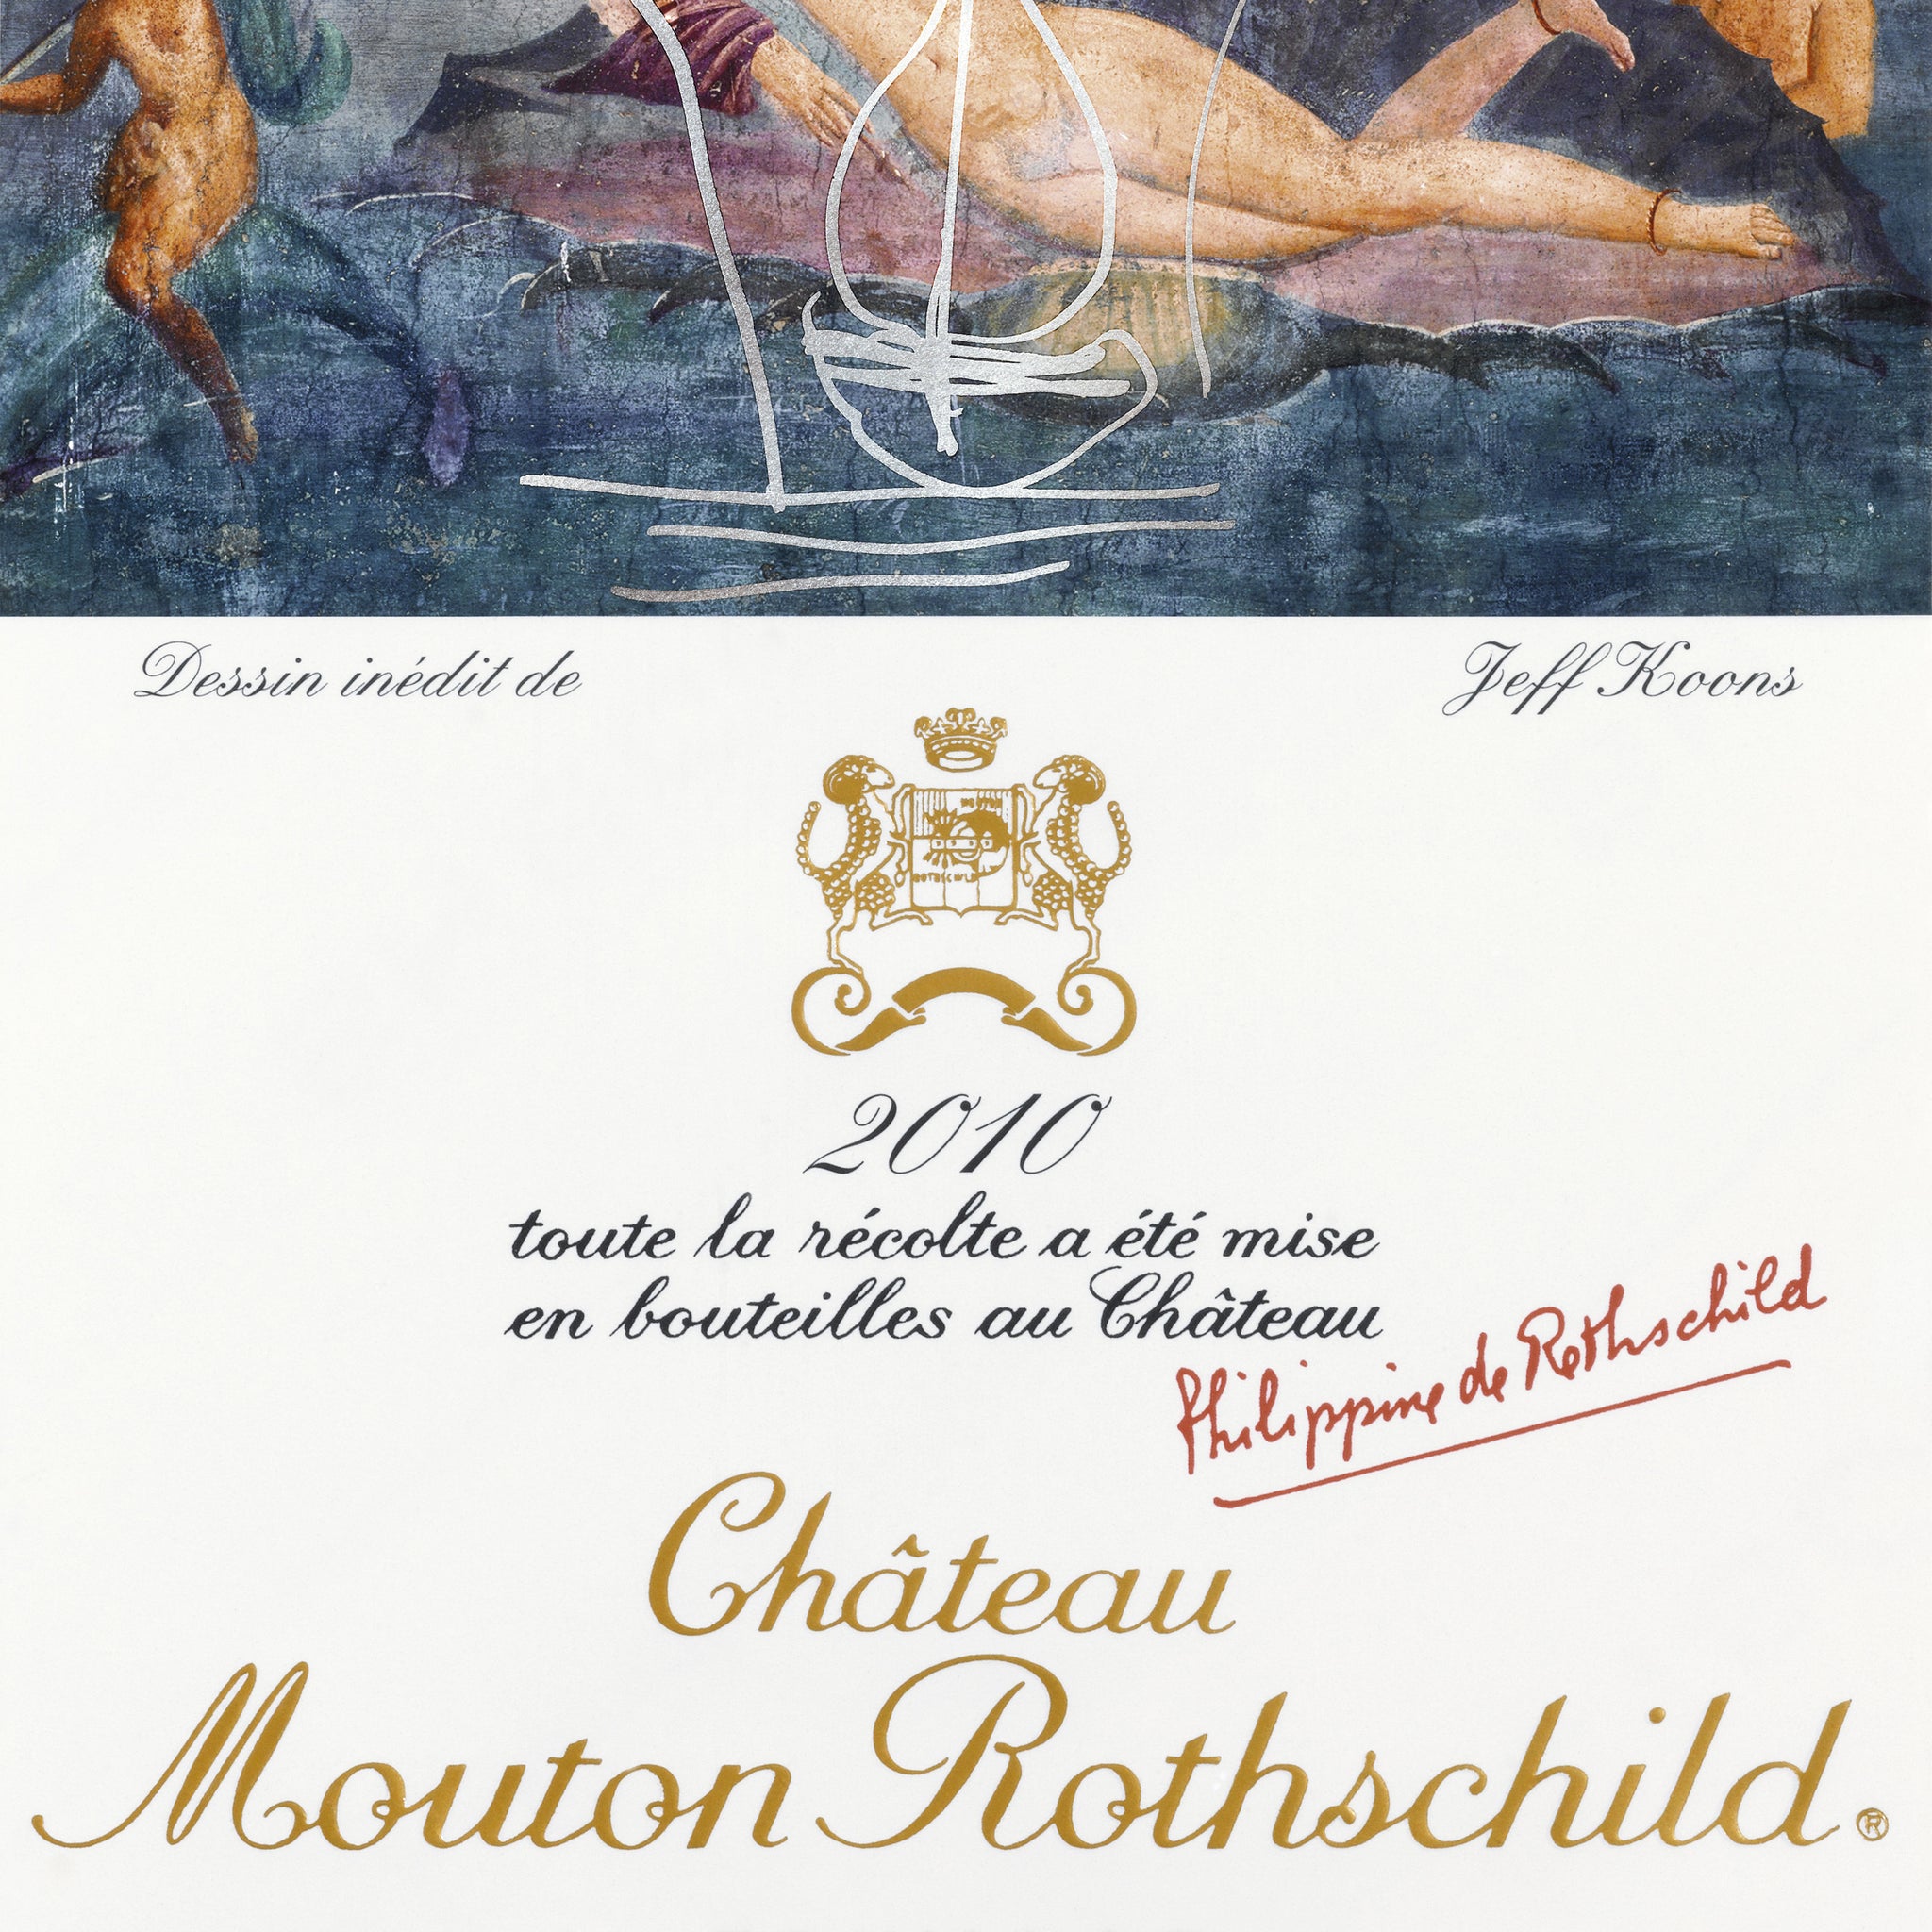 Chateau Mouton Rothschild 2011 (6x75cl)